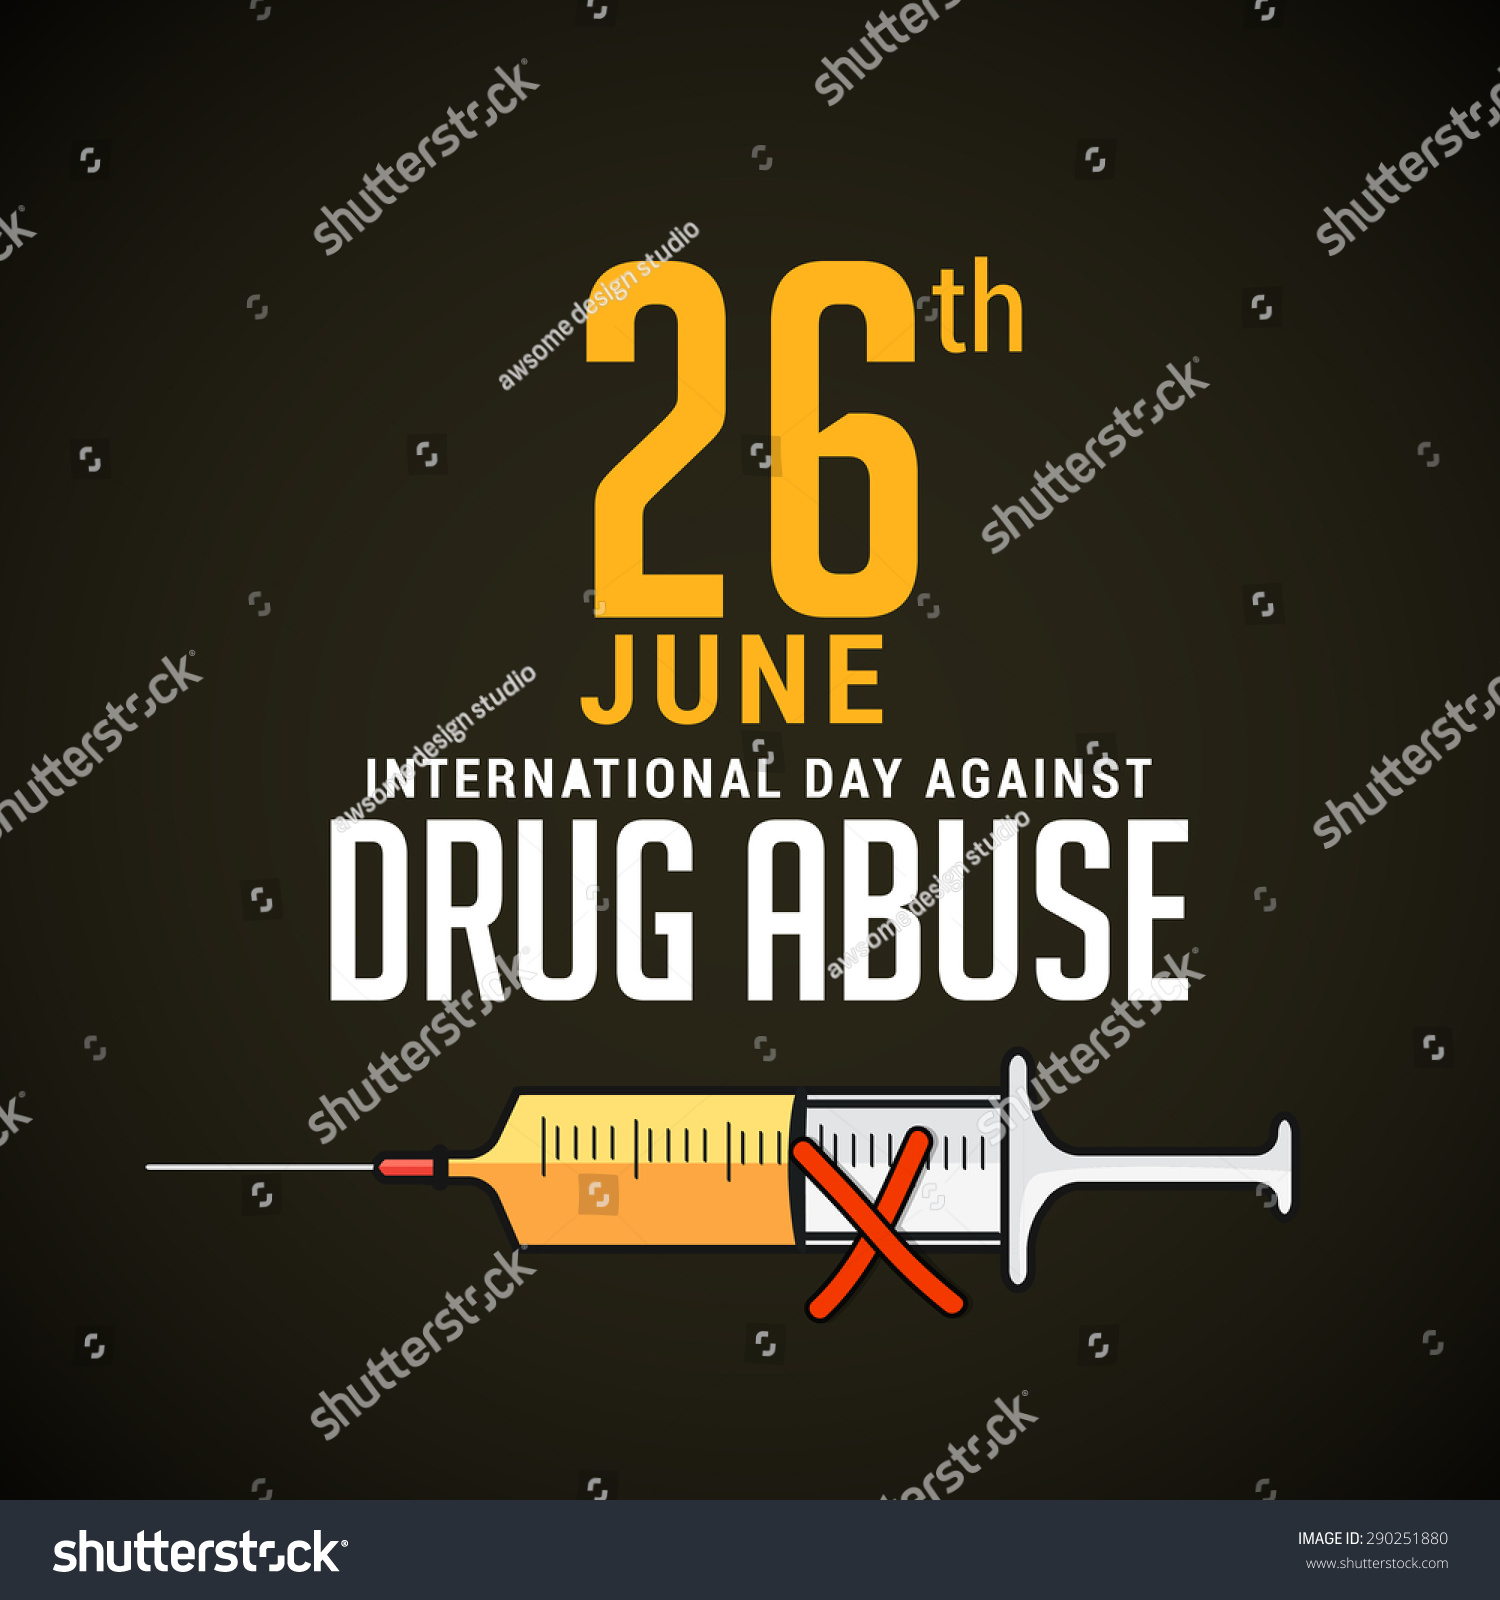 International Day Against Drug Abuse Stock Illustration 290251880 ...